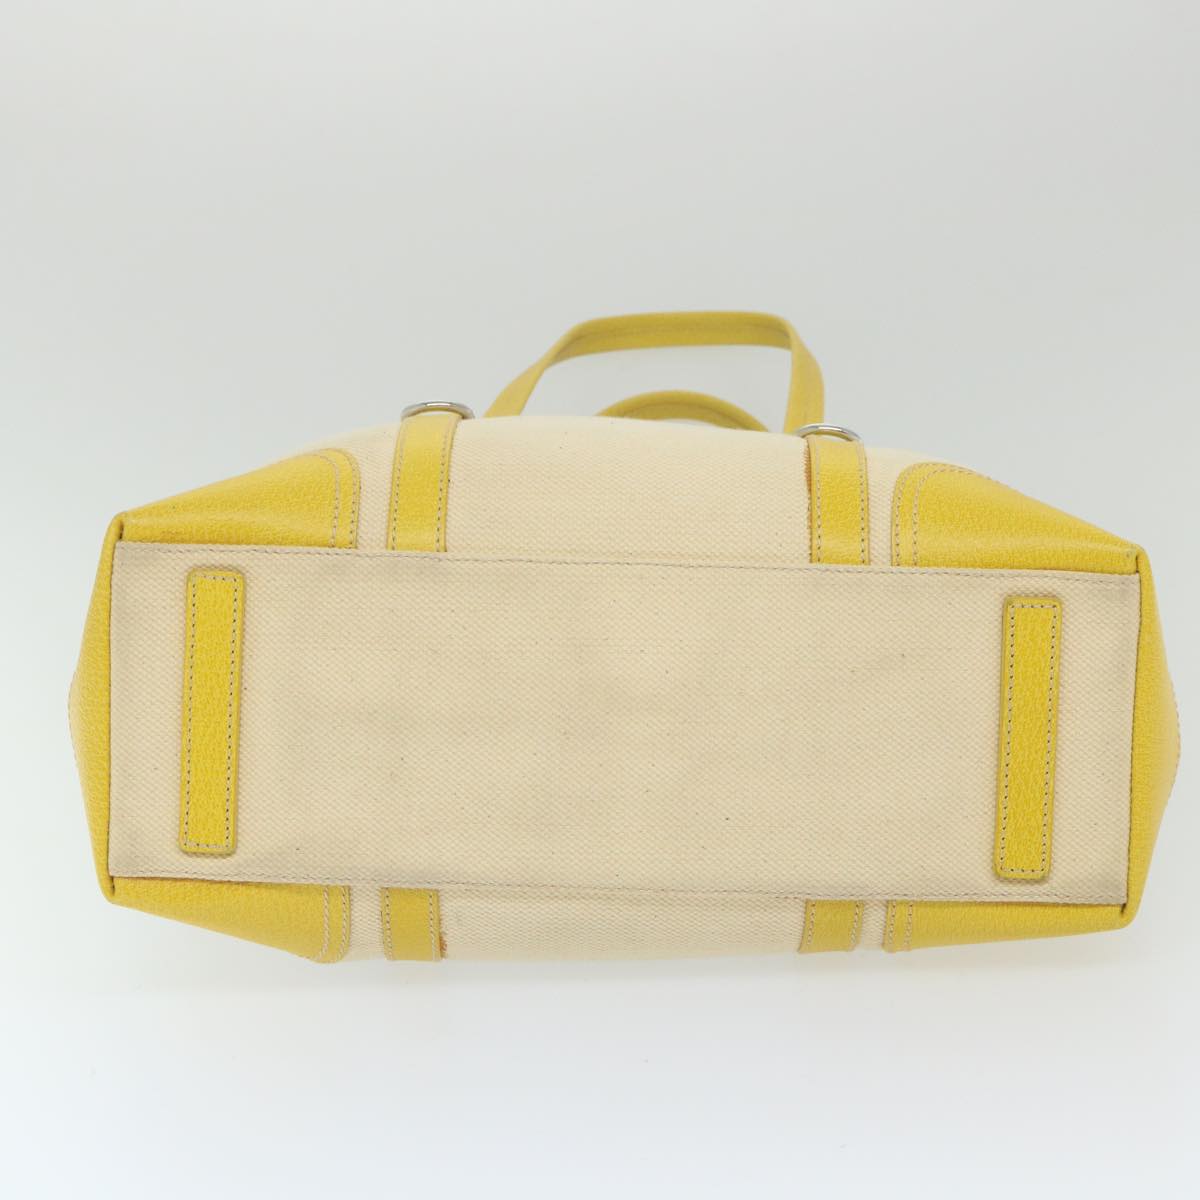 PRADA Tote Bag Canvas Beige Yellow Auth 59691